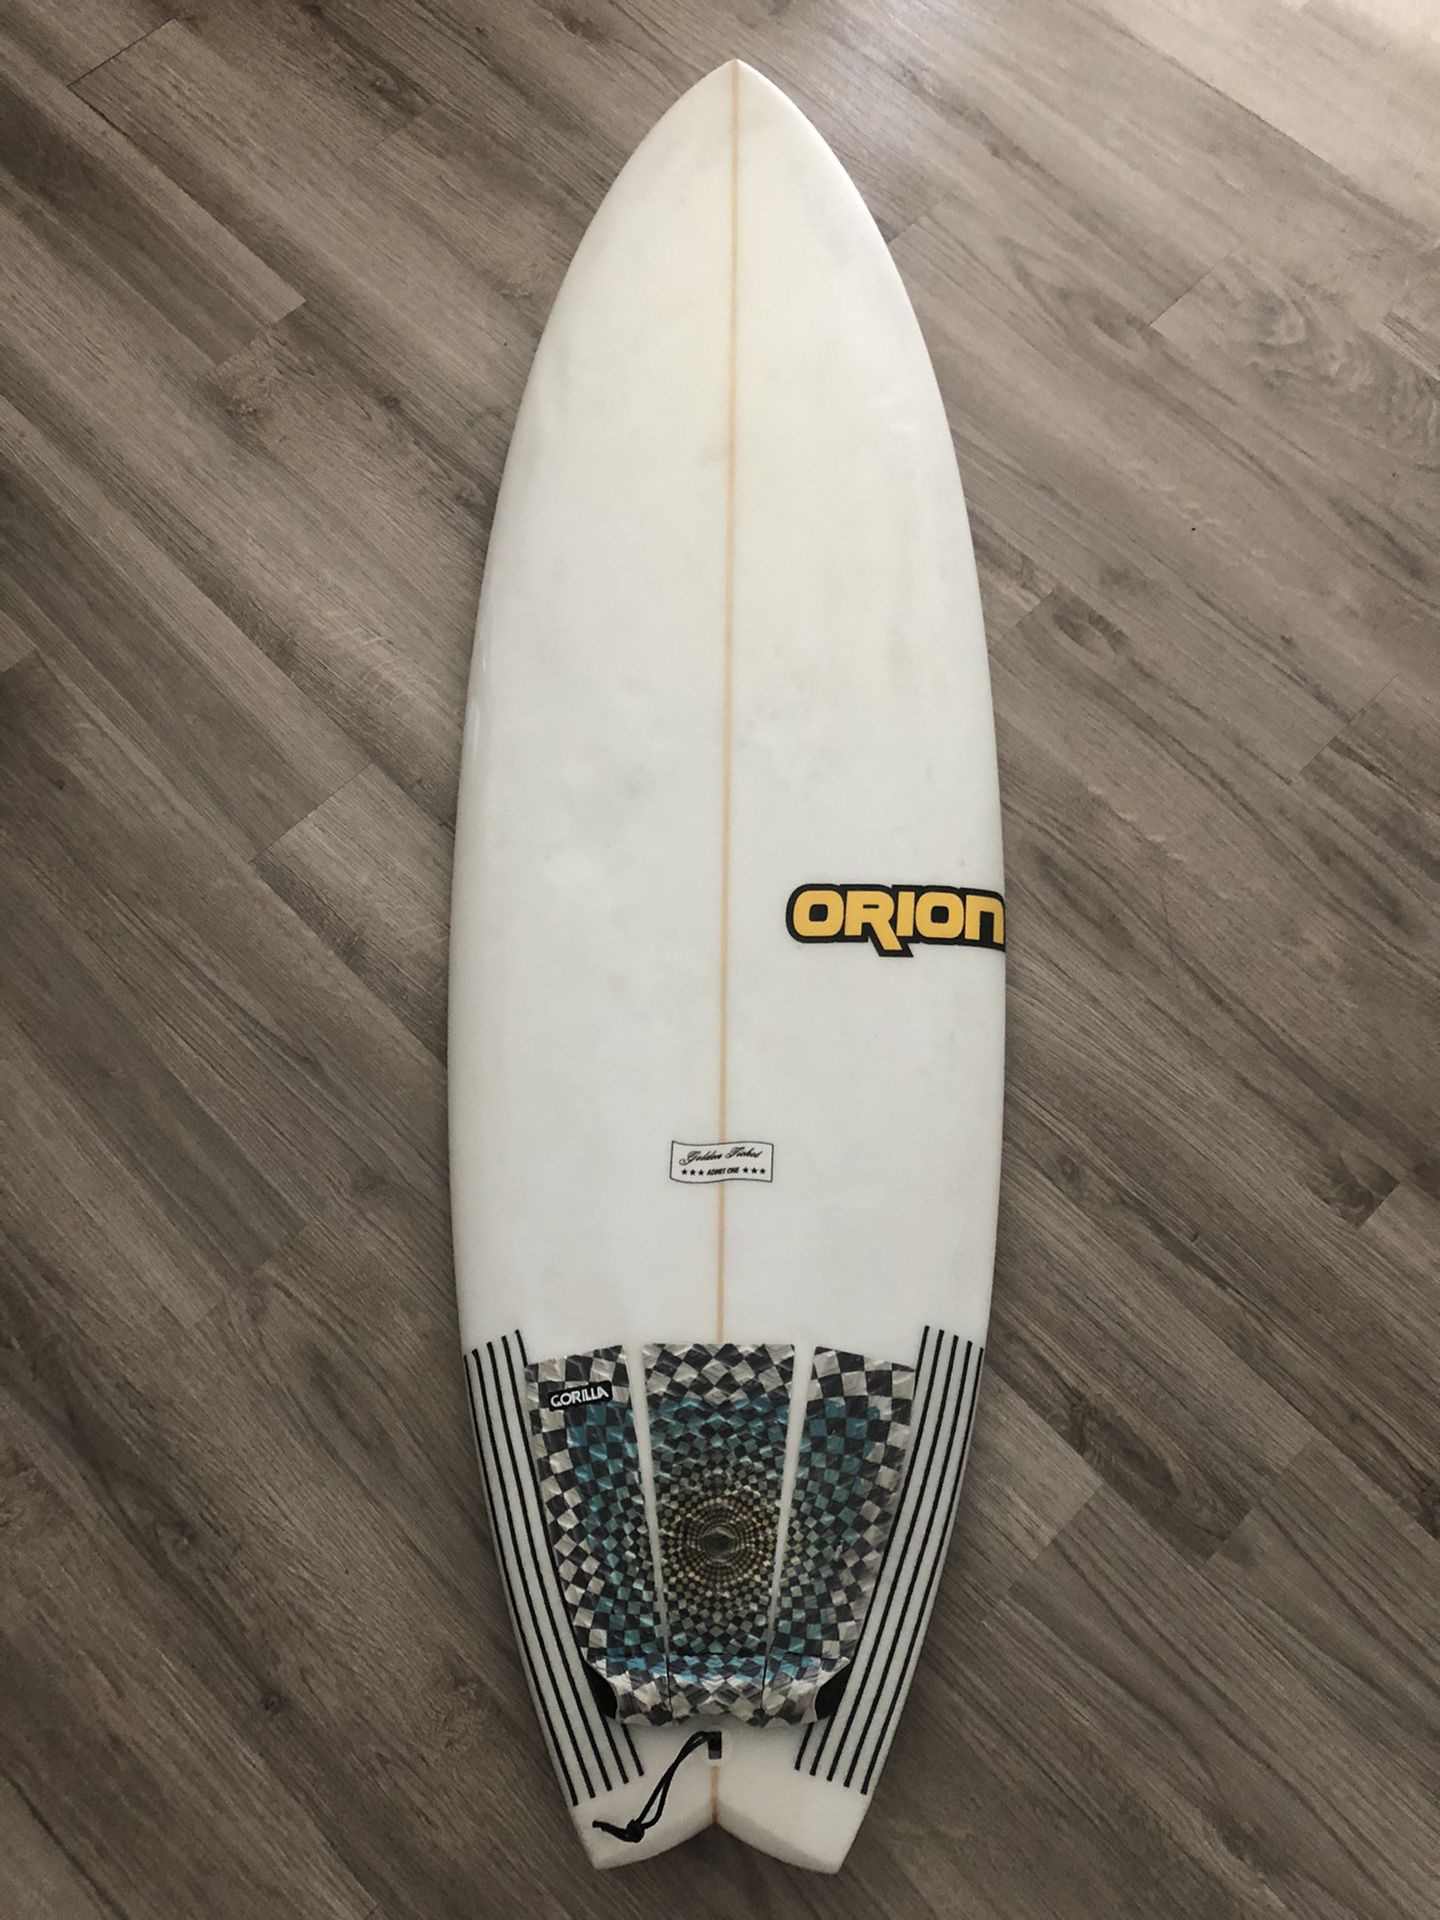 Orion golden ticket surfboard (fish)